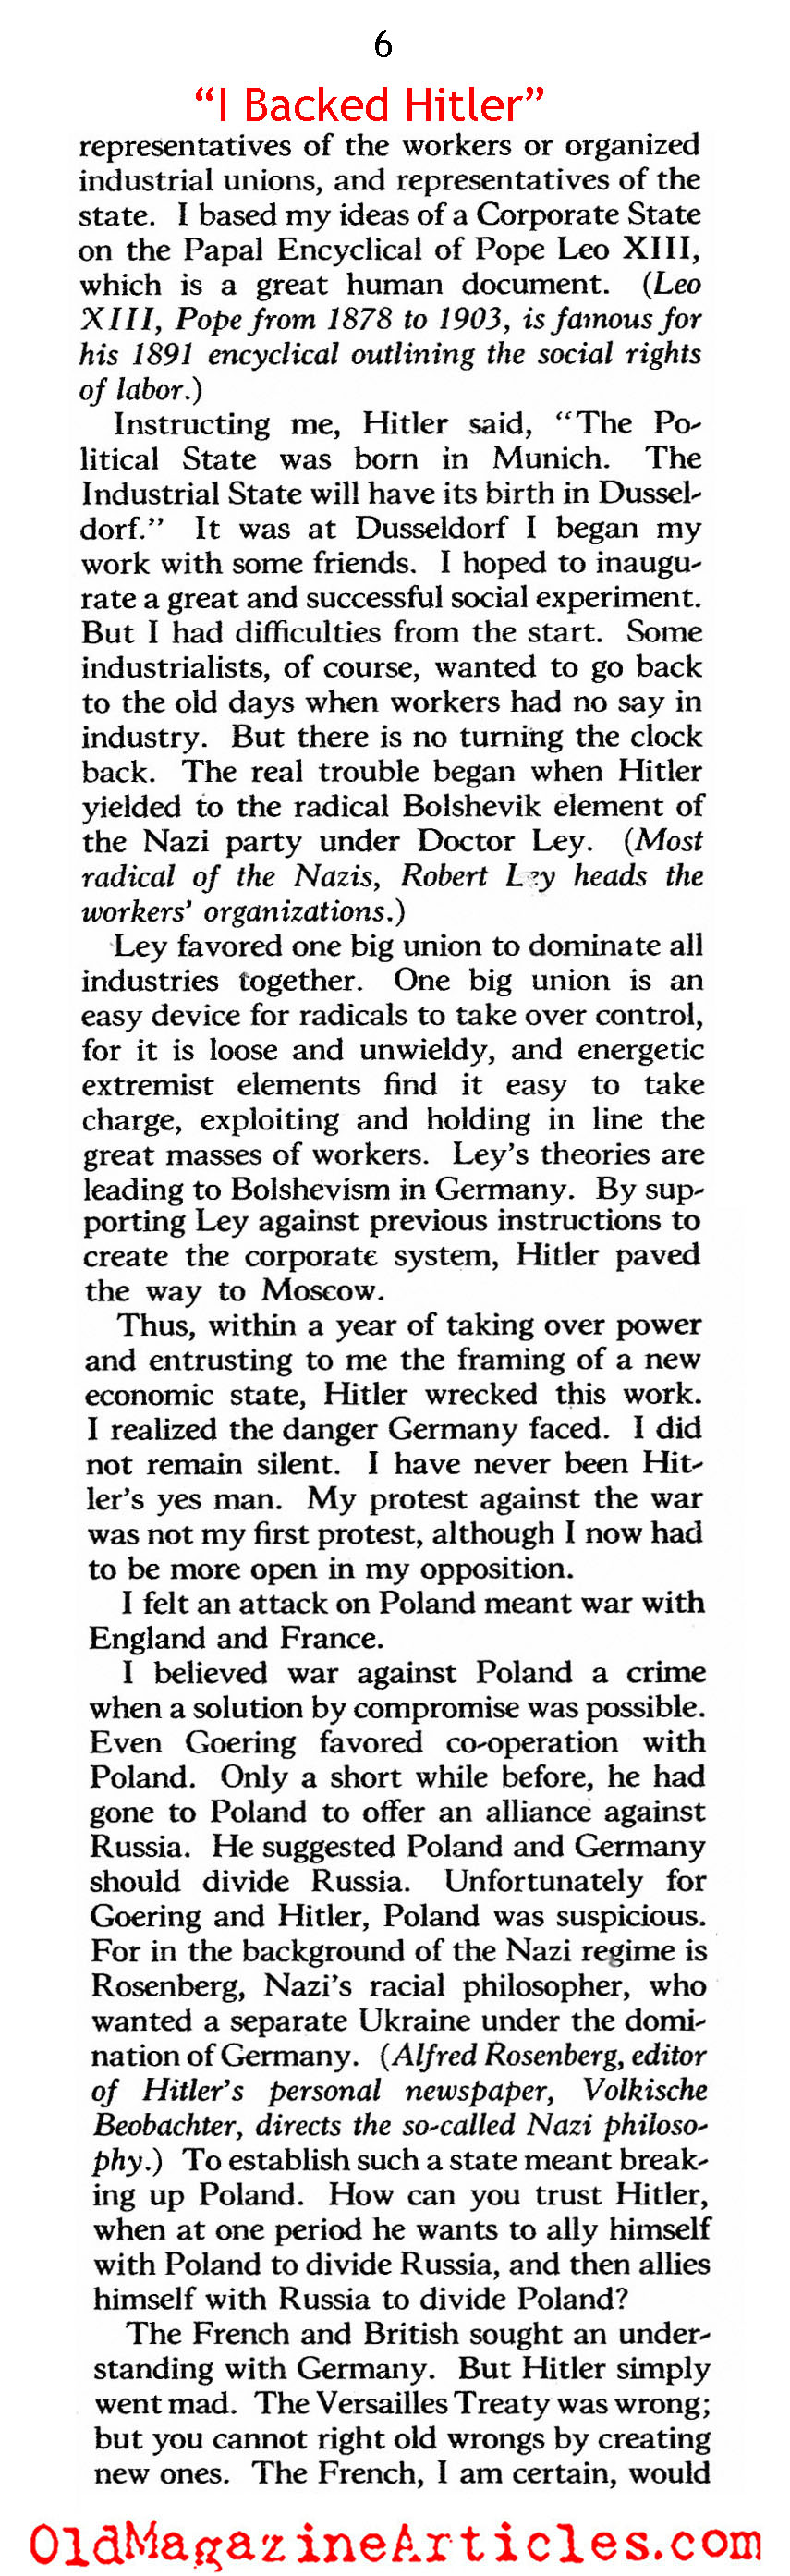 ''I Backed Hitler'' (American Magazine, 1940)